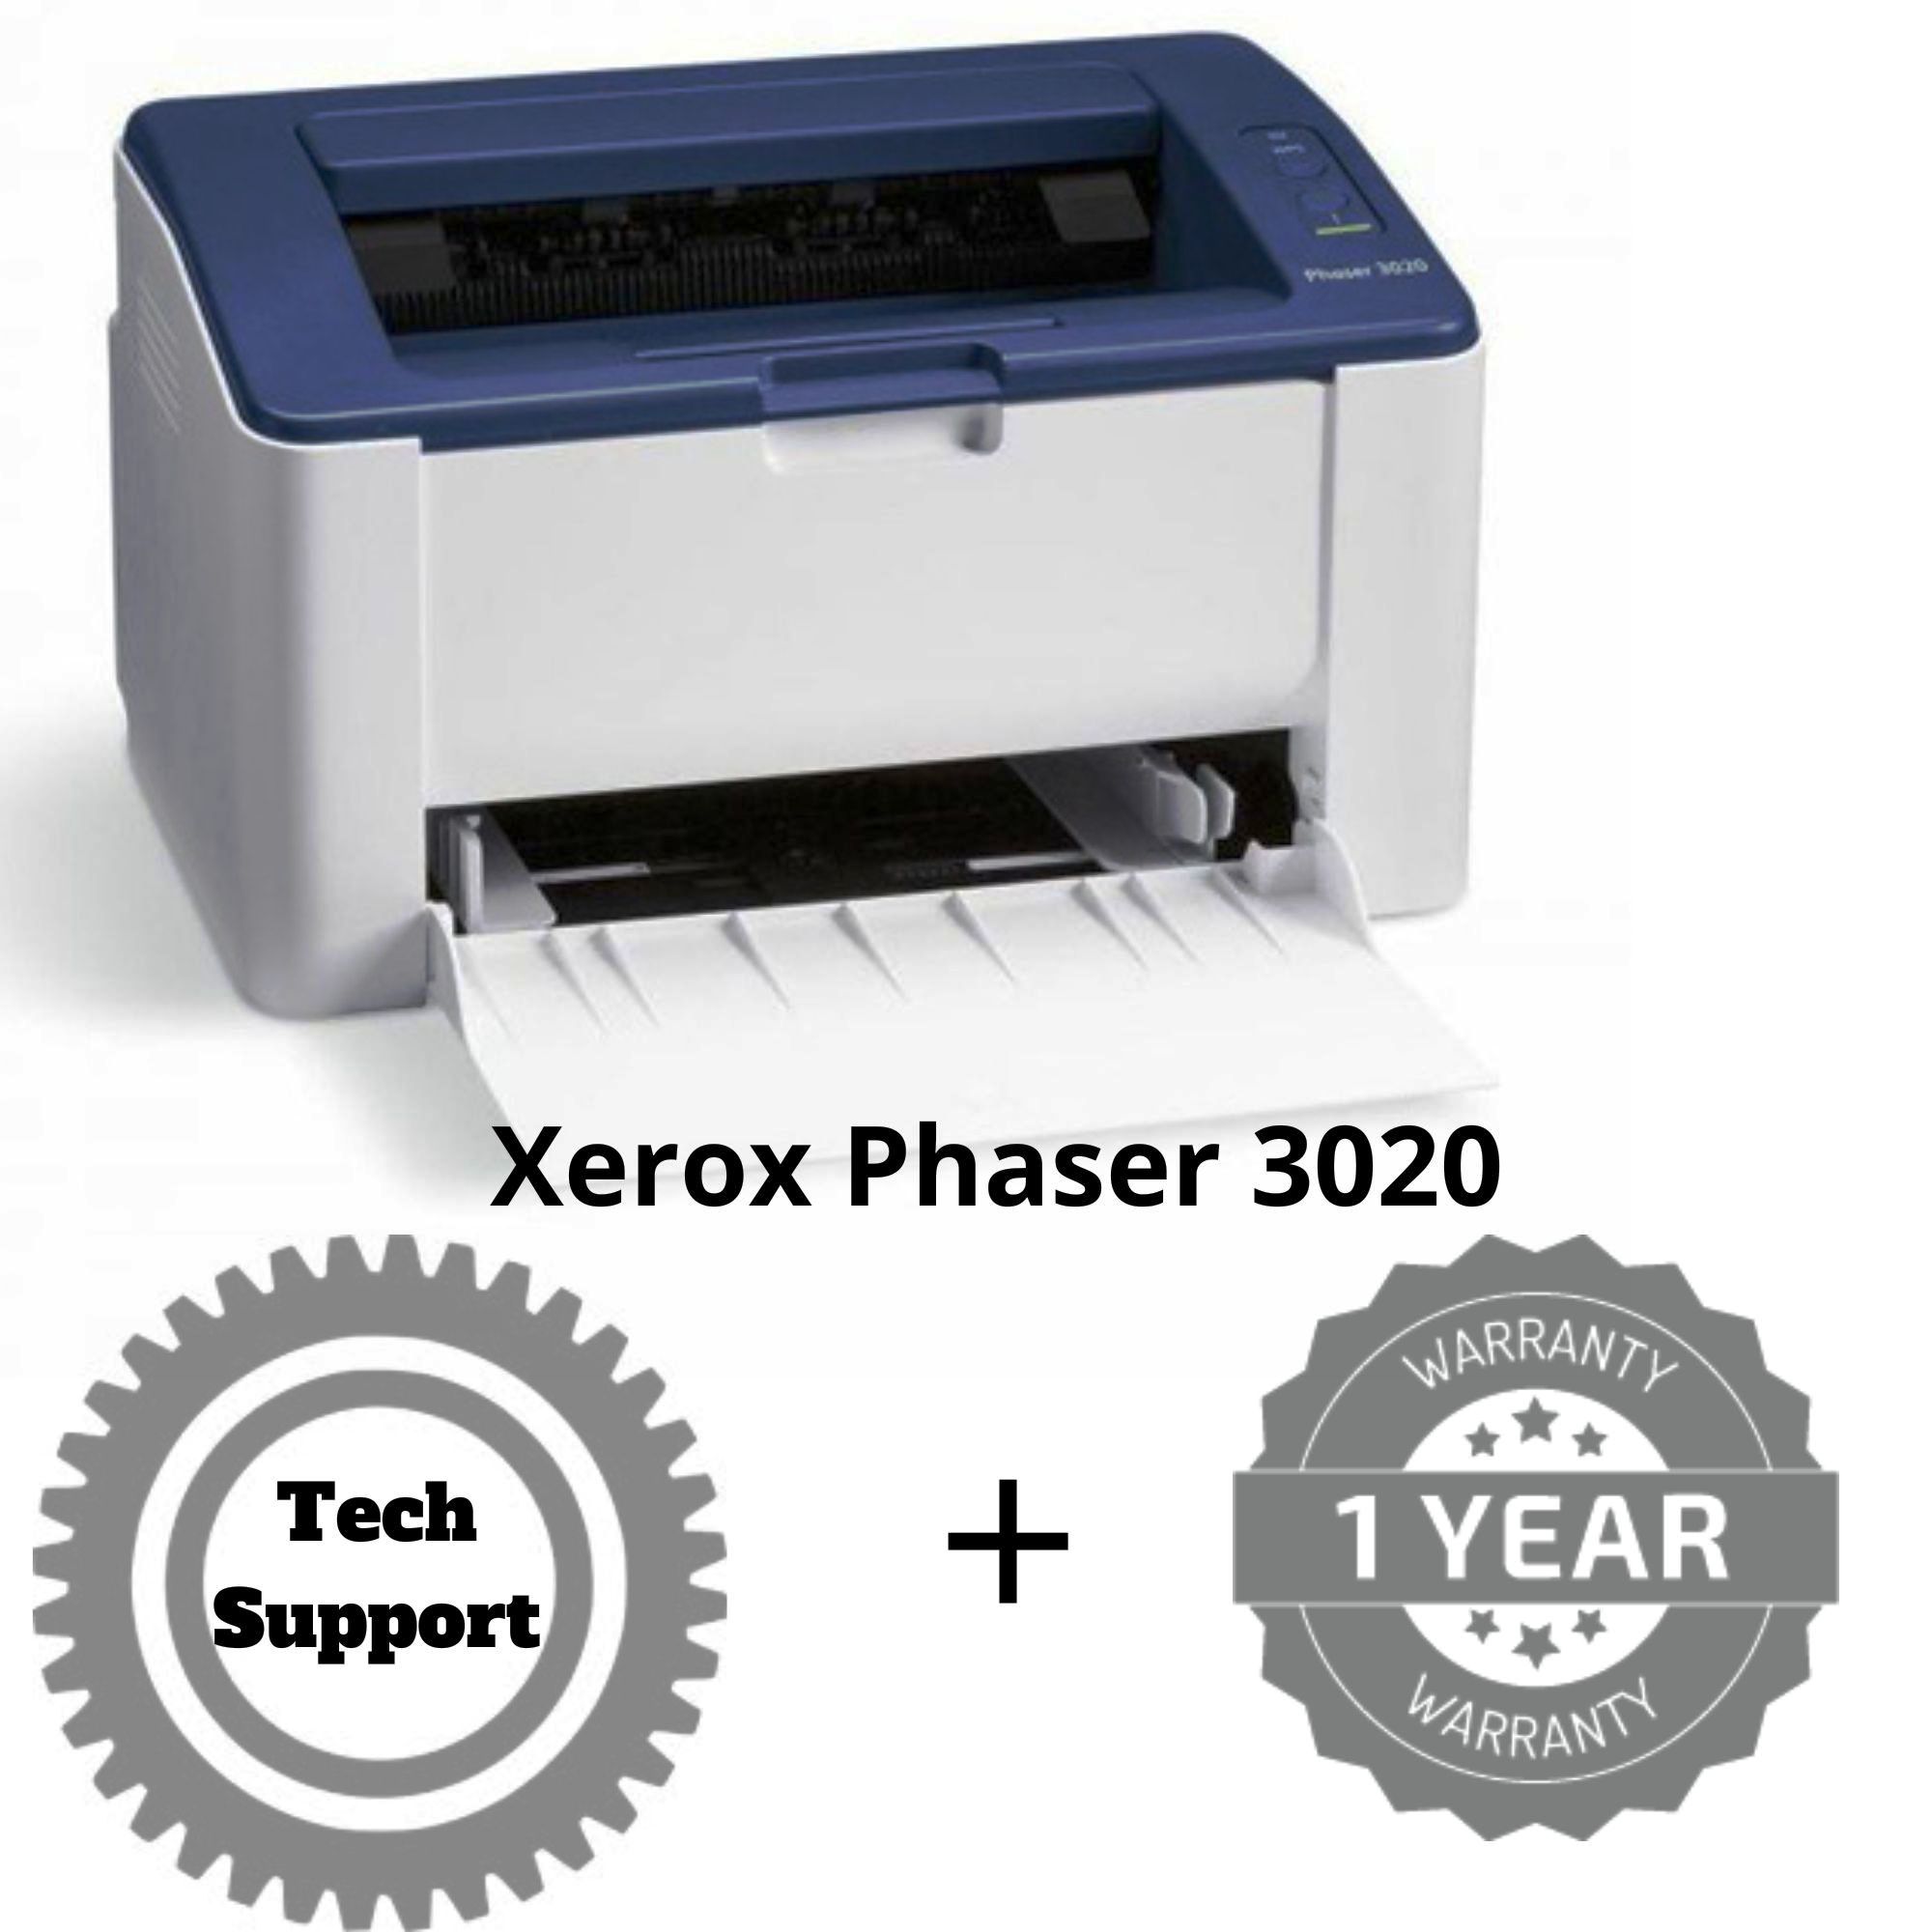 Купить принтер xerox phaser 3020. Xerox Phaser 3020. Принтер Xerox Phaser 3020. Принтер Xerox Phaser 3020 двусторонняя печать. Чип Xerox Phaser 3020.